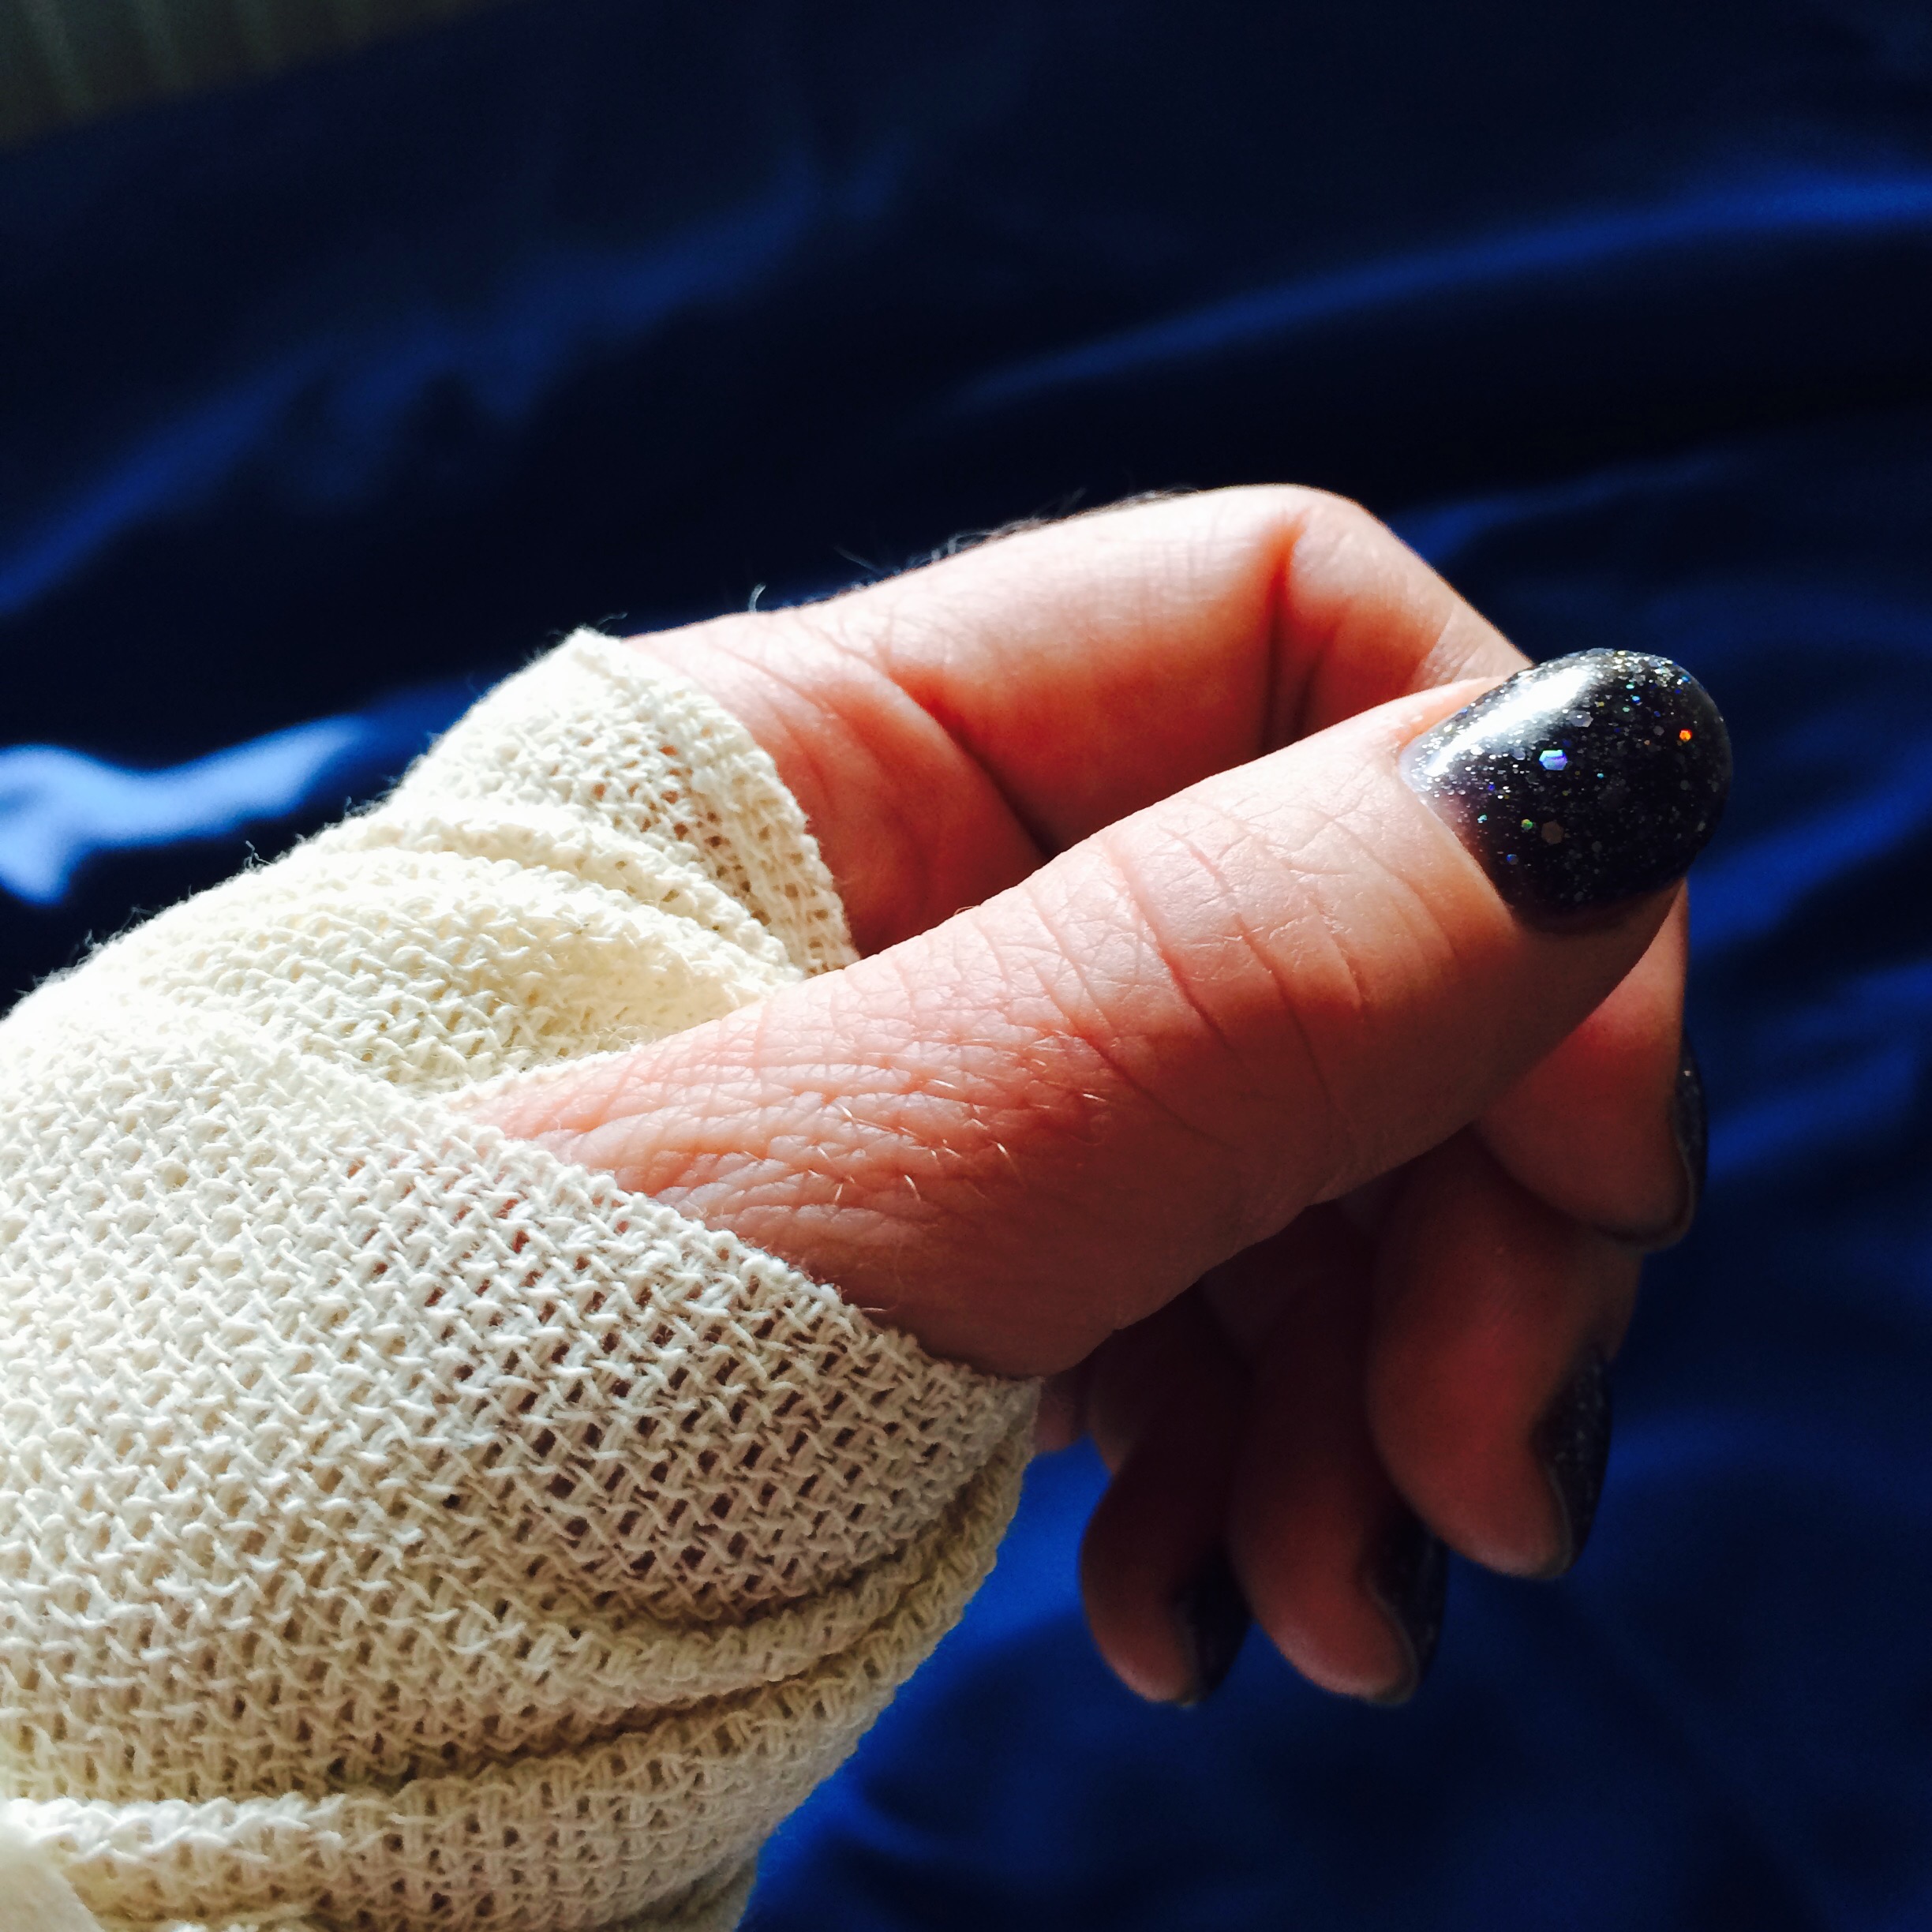 Hand i bandage med svartglittrigt nagellack på tummen.